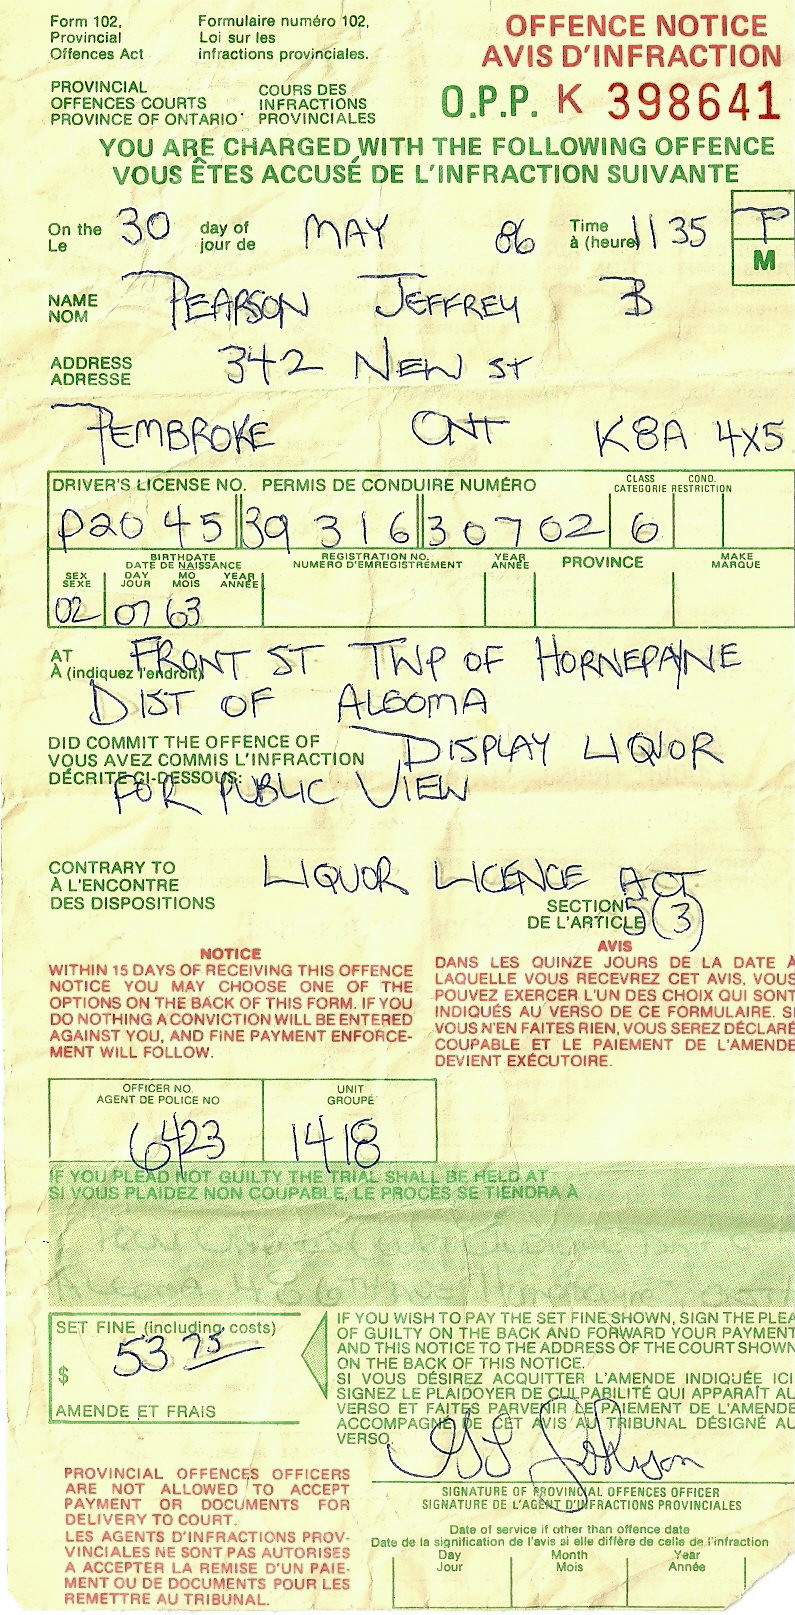 1986 Memorabilia - Honrepayne ON ticket